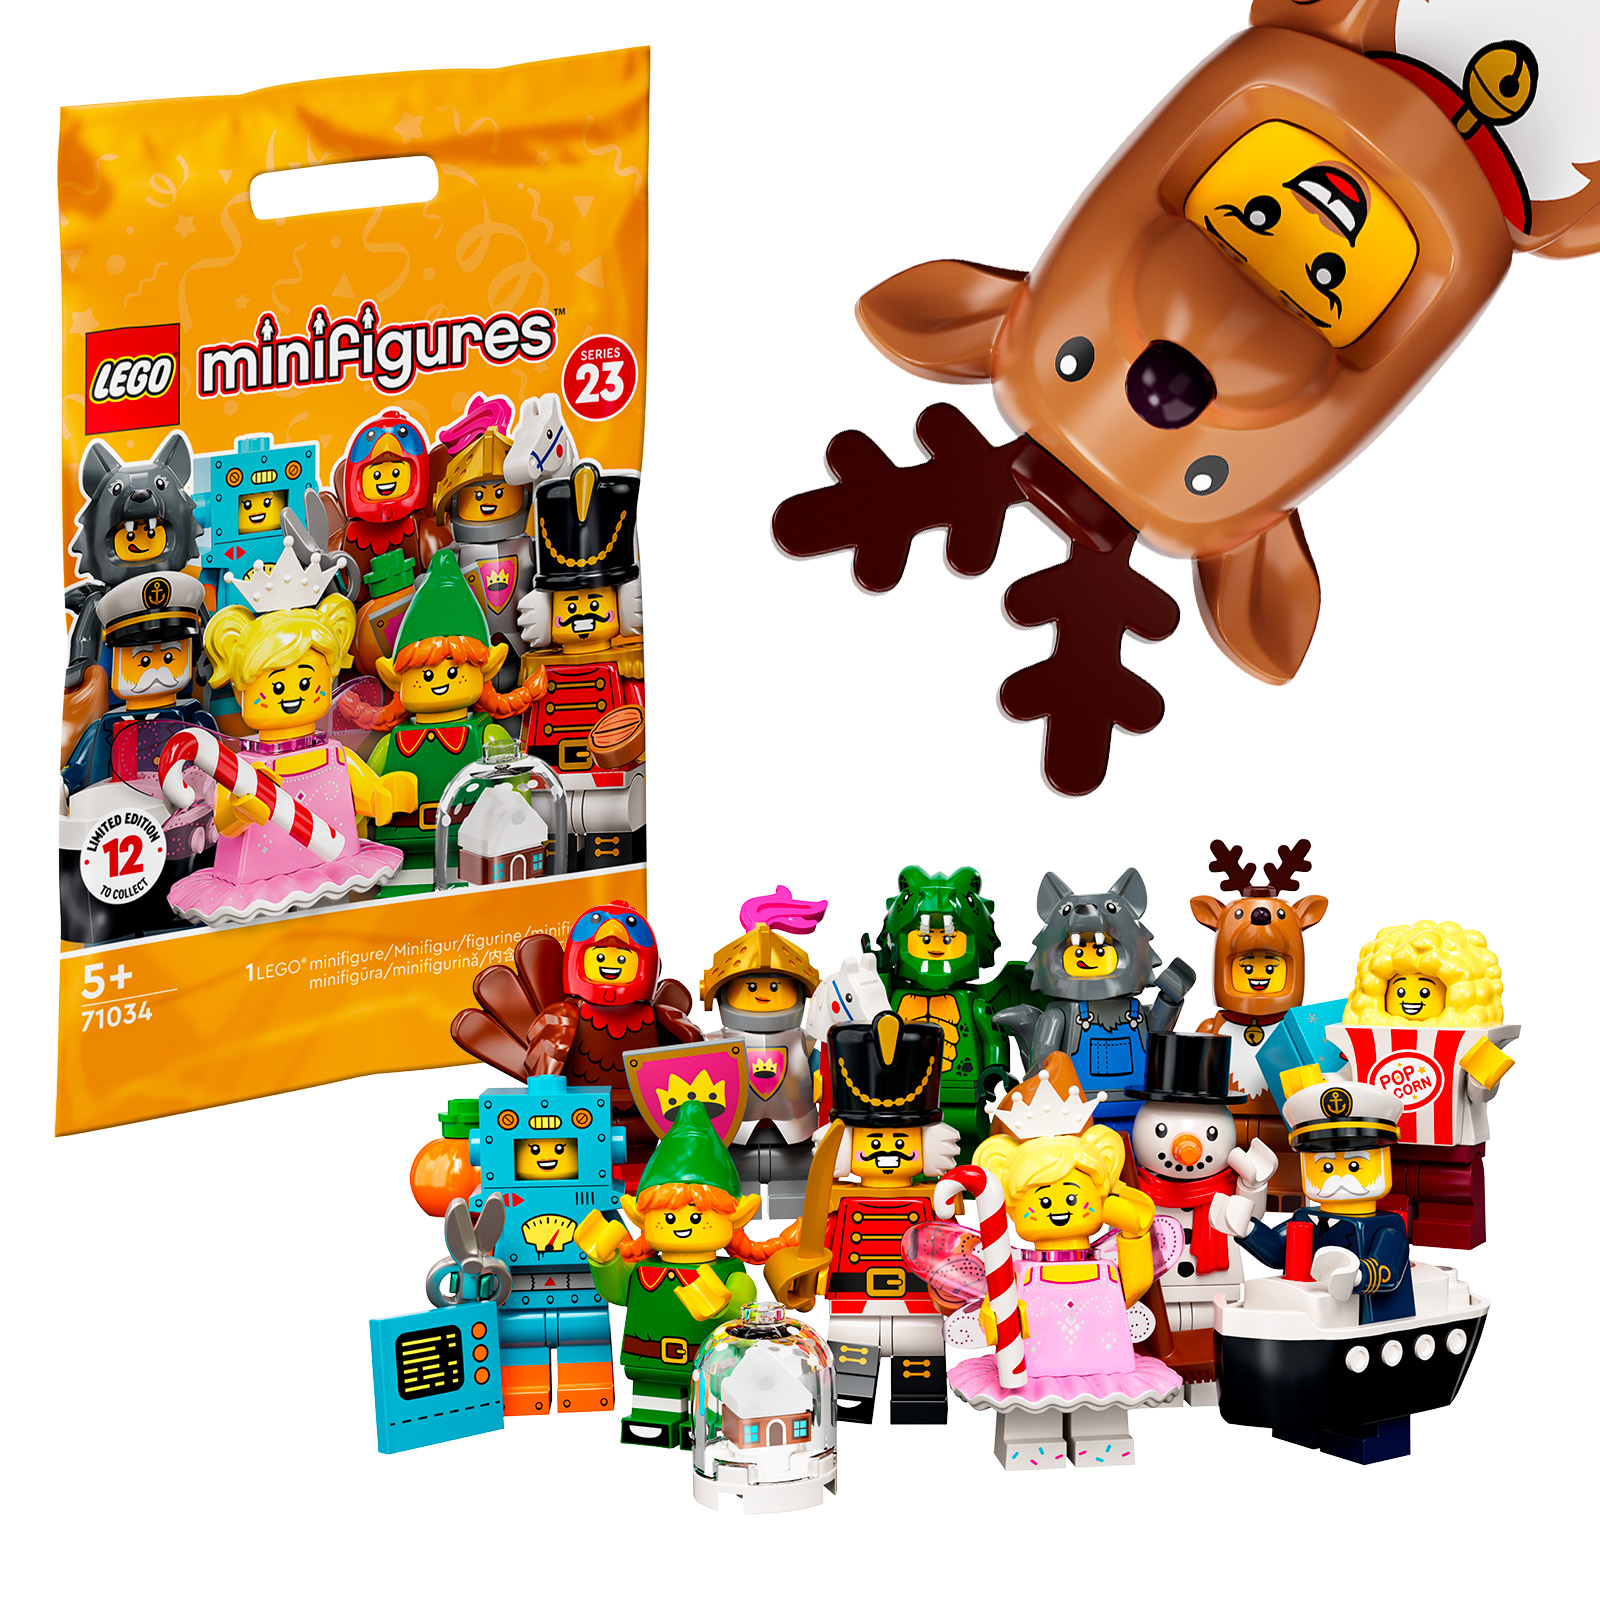 LEGO 71034 Collectible Minifigures 系列 23：所有角色都在商店中